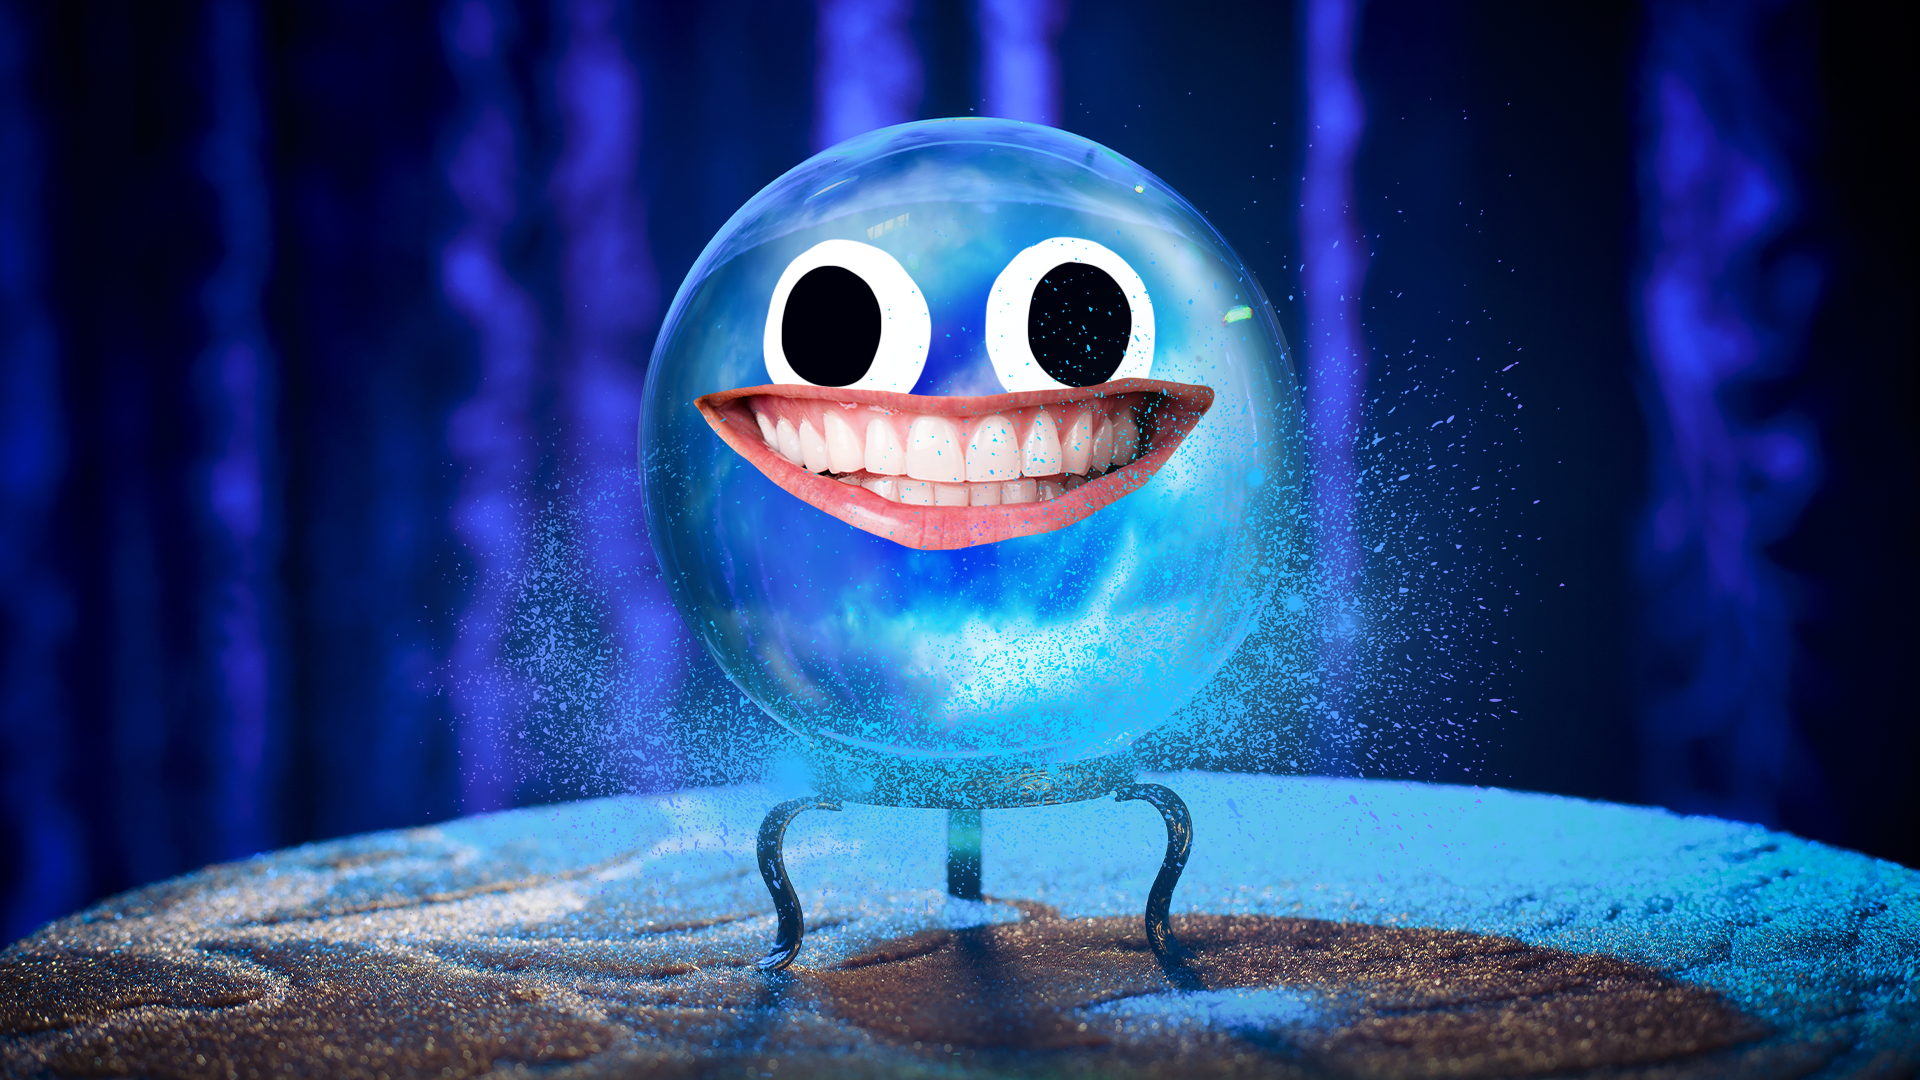 Crystal ball with goofy face